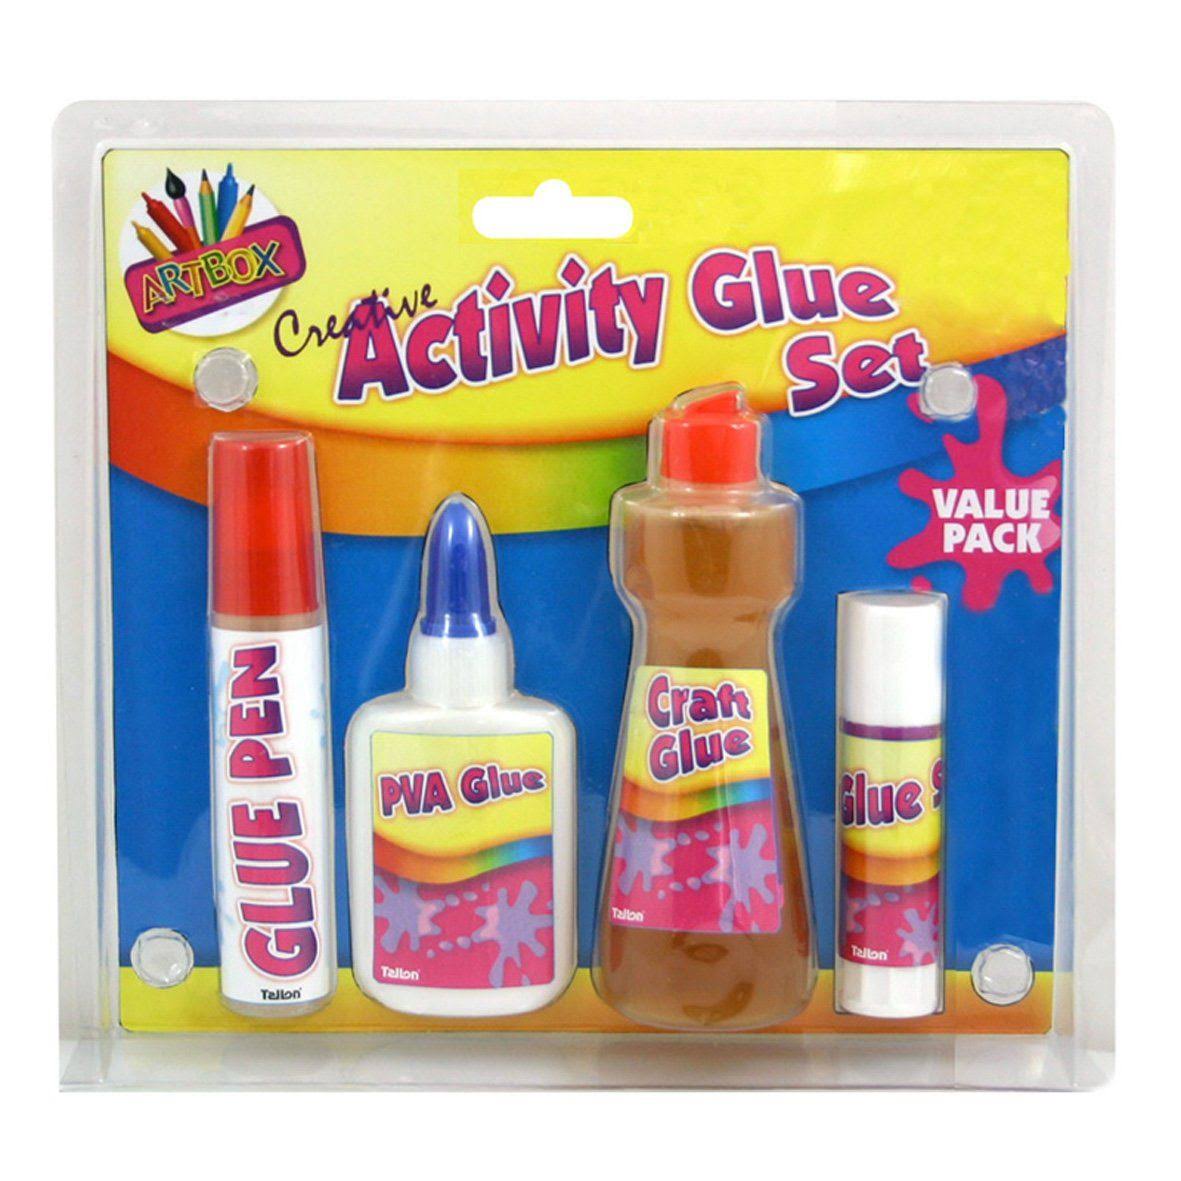 Art Box Creative Activity Glue Set - 4pcs